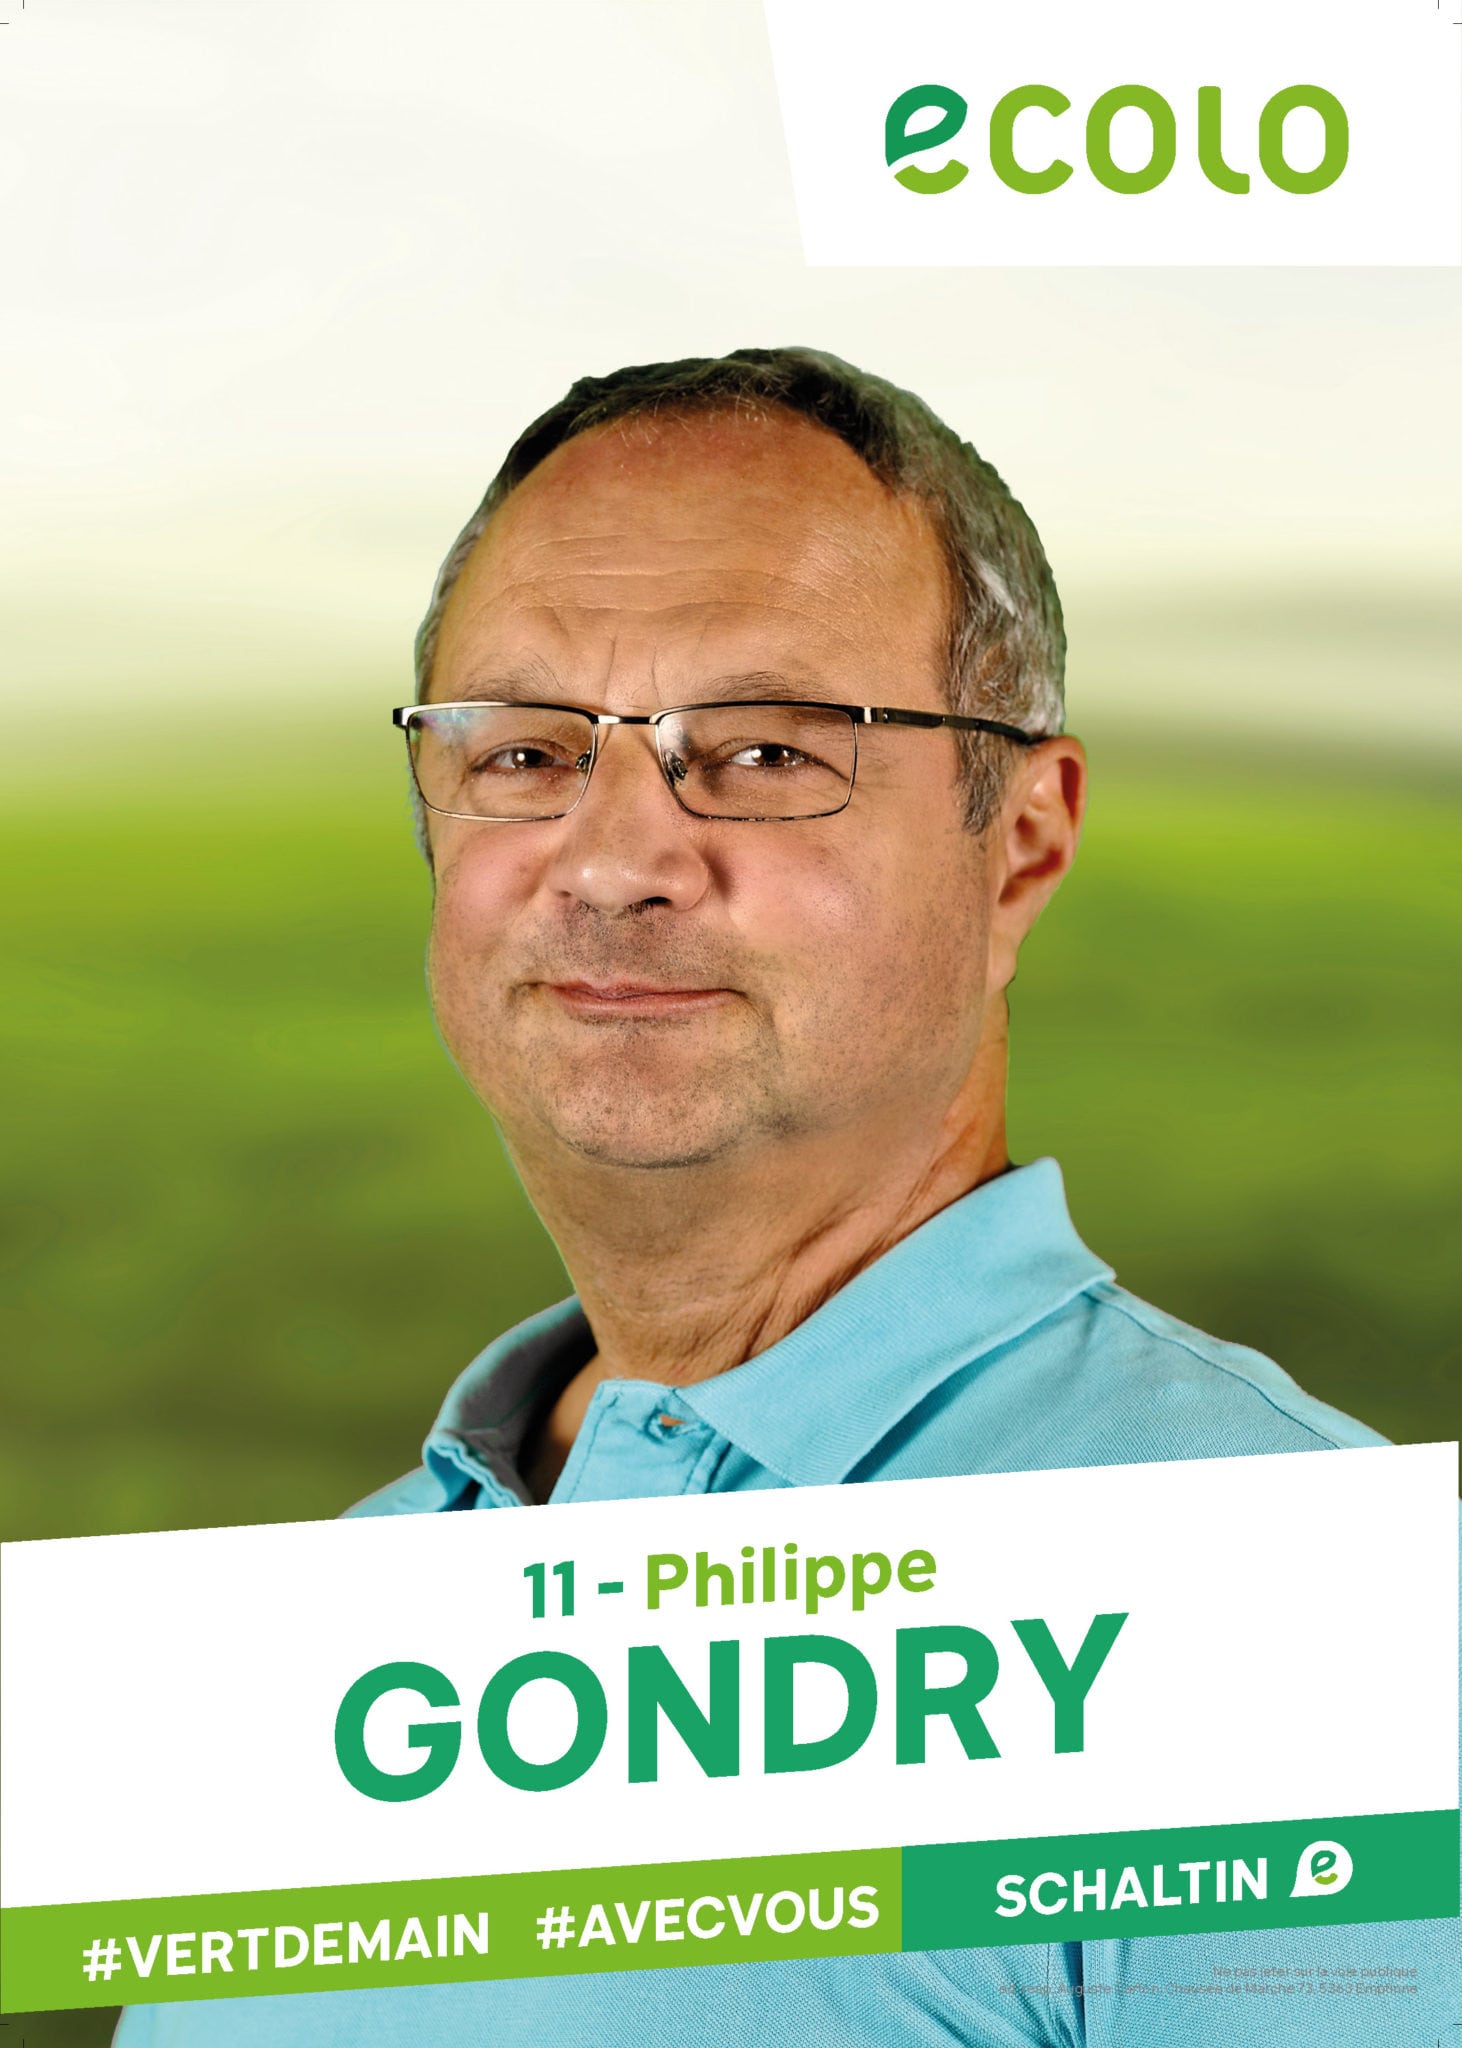 11 - Philippe GONDRY